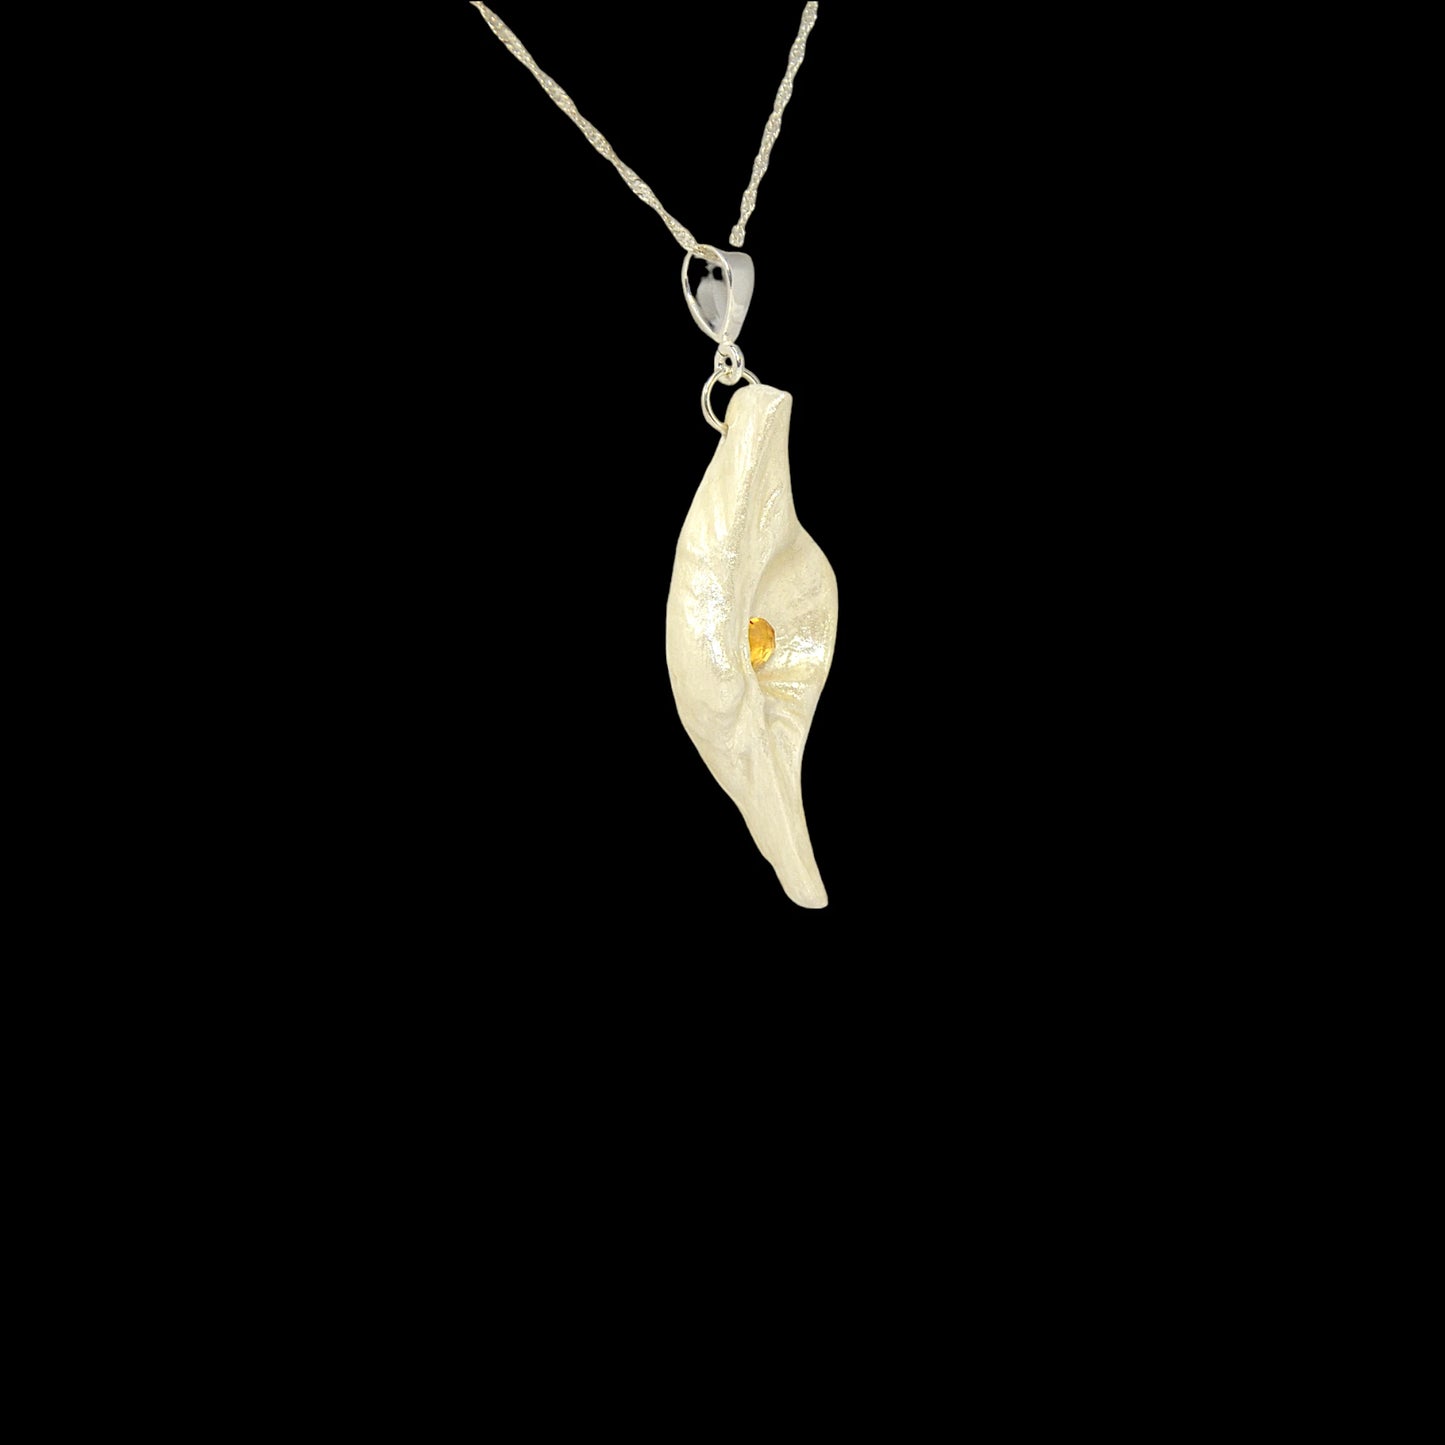 Lightmaker natural seashell pendant A beautiful pear shaped rose cut Citrine compliments the pendant.